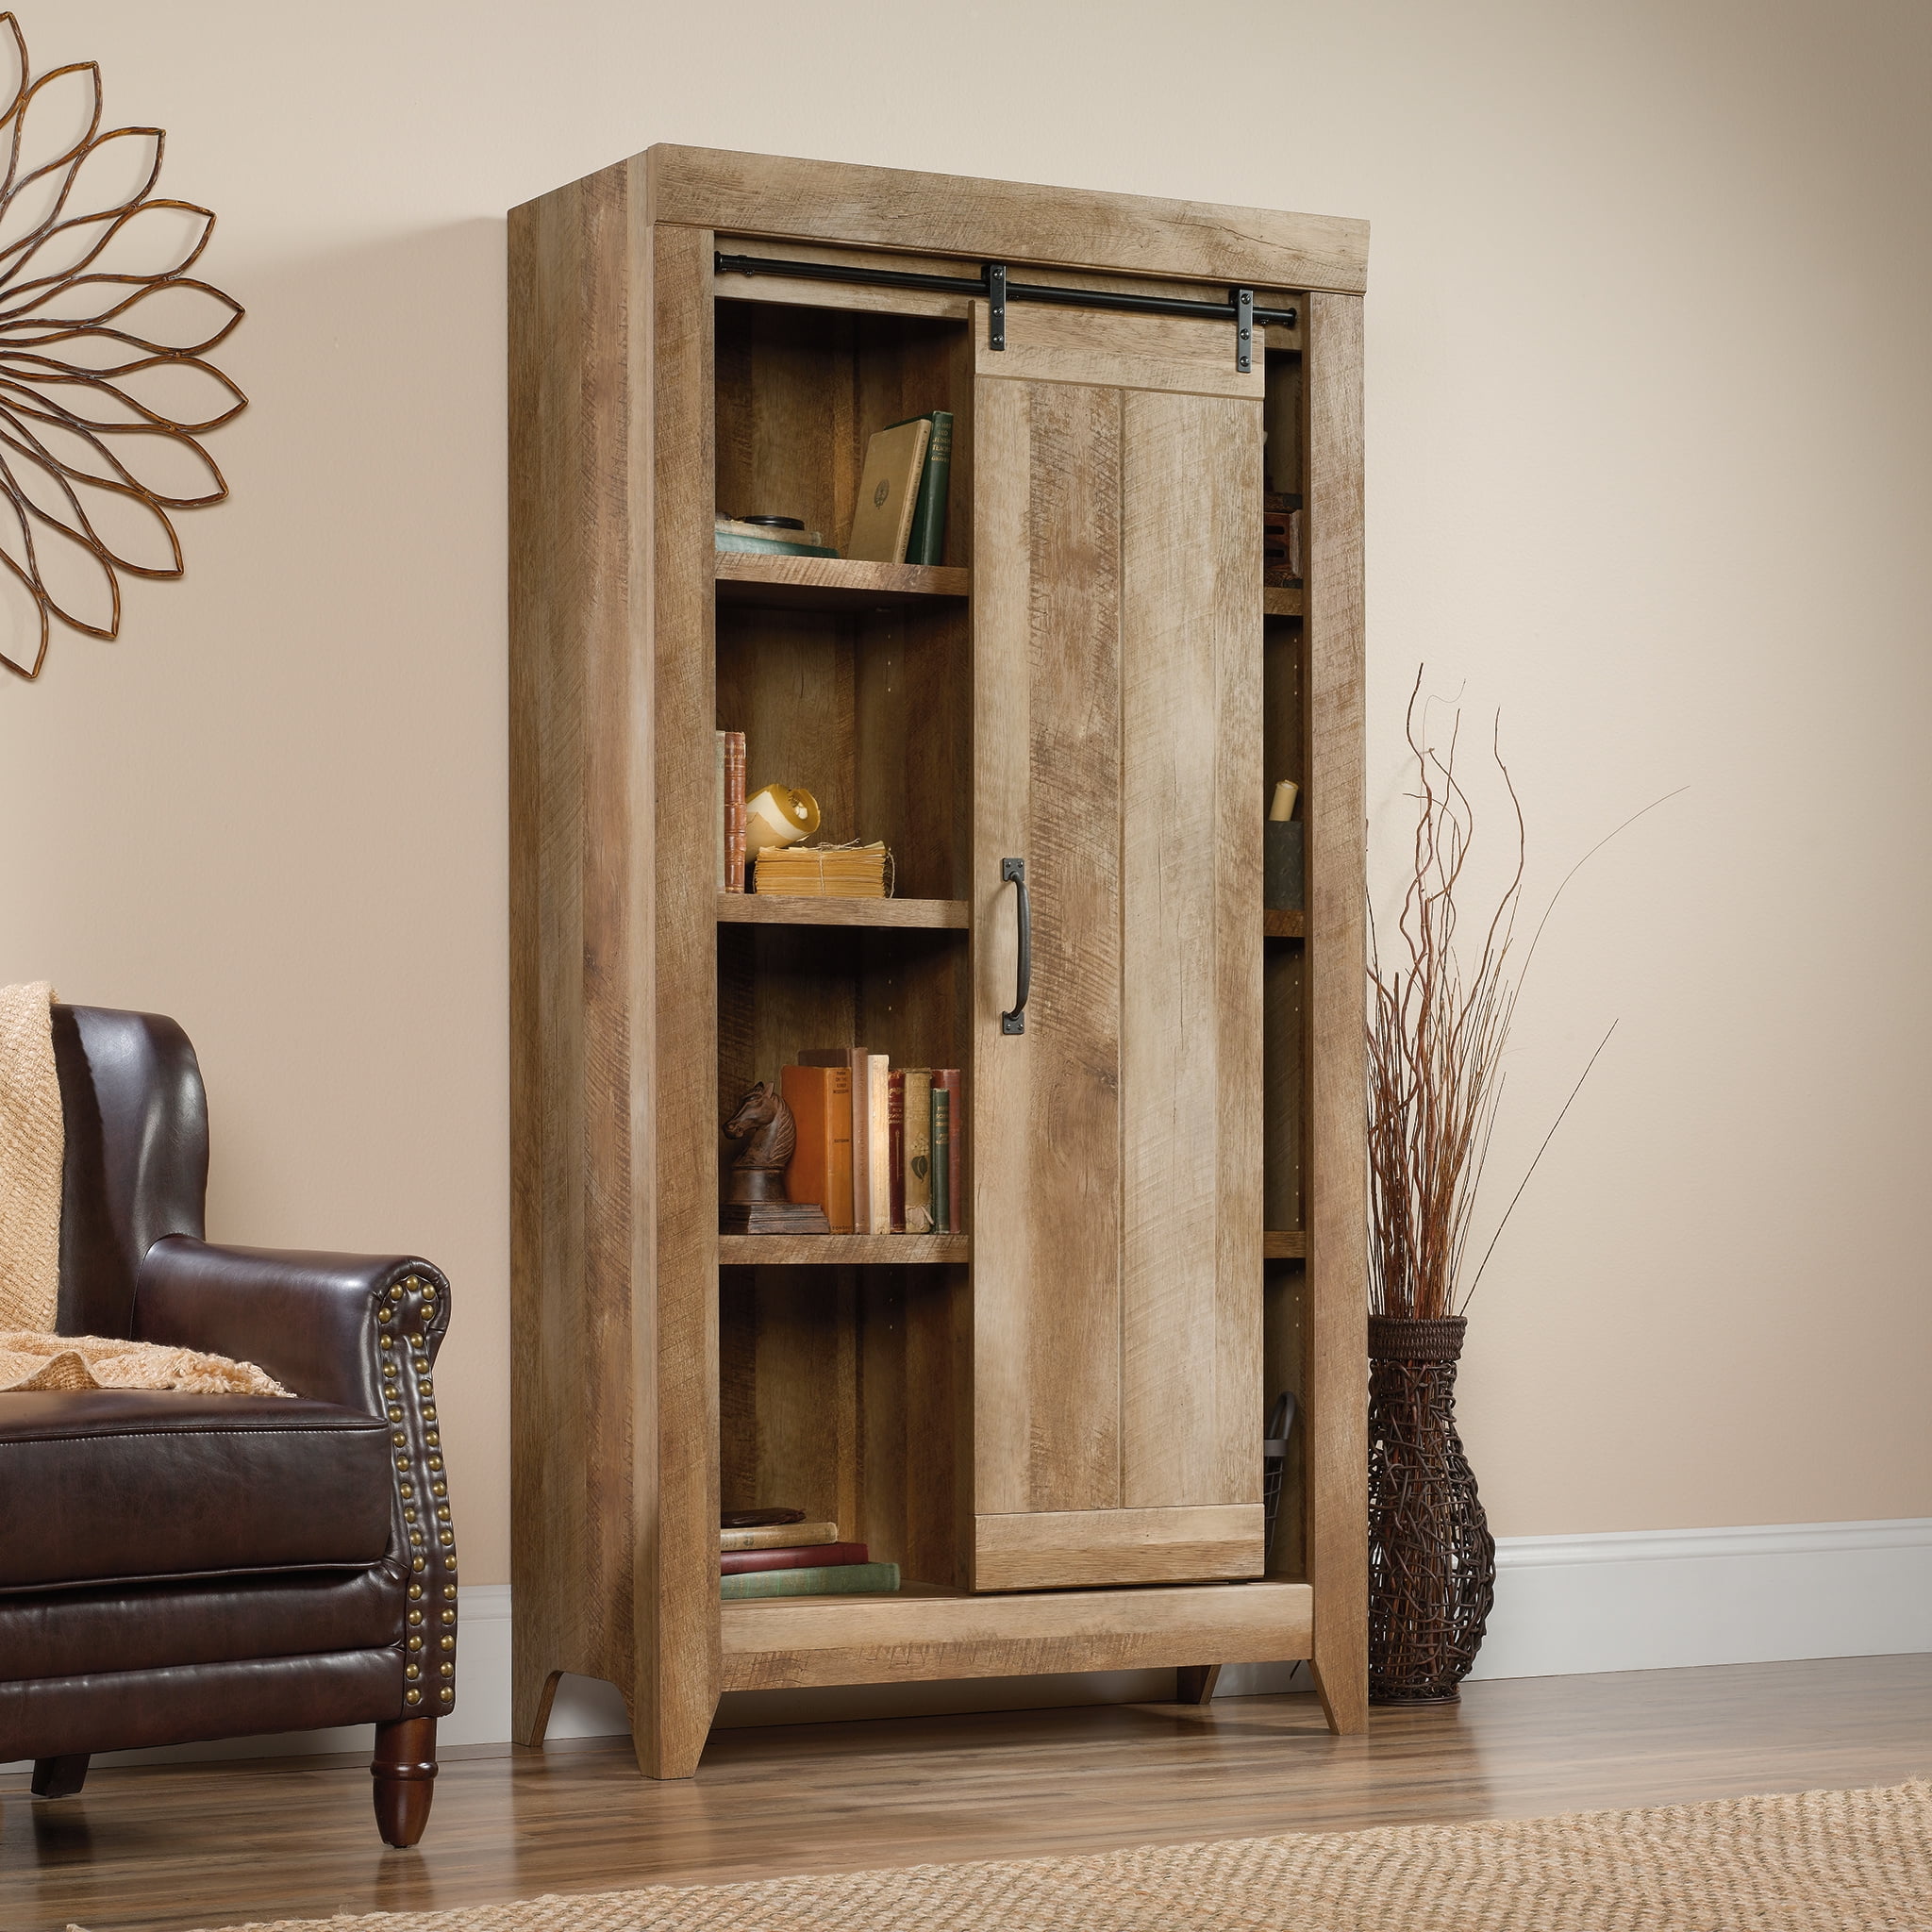 Details about   Storage Cabinet Clifford Place Living Room Furniture Adjustable Shelf Home Solid 